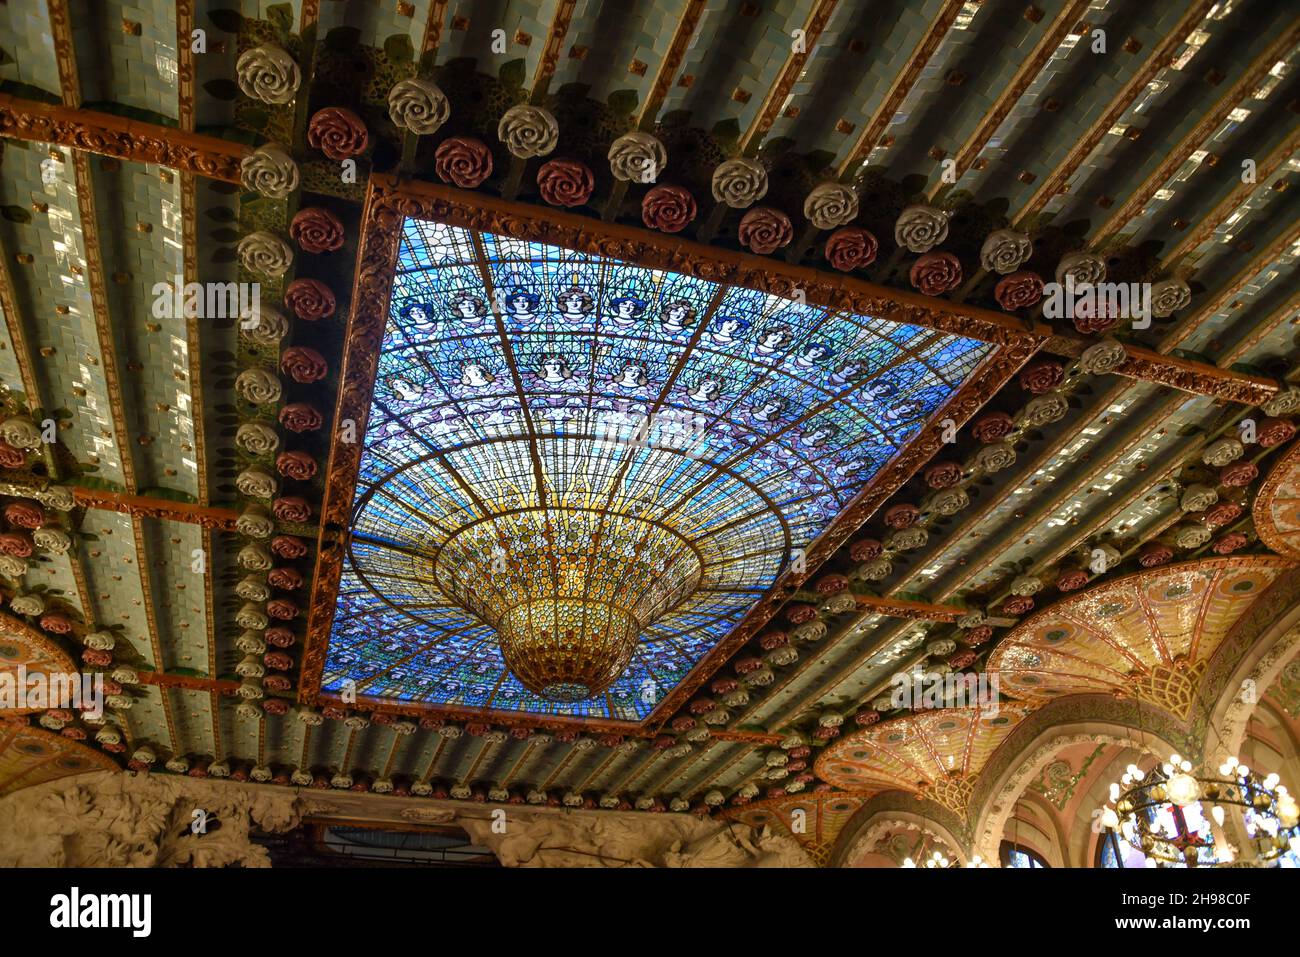 Barcelona, Spain - 23 Nov, 2021: Stained-glass dome ceiling Palau de la Música Catalana concert hall interior view, Barcelona, Catalonia, Spain Stock Photo